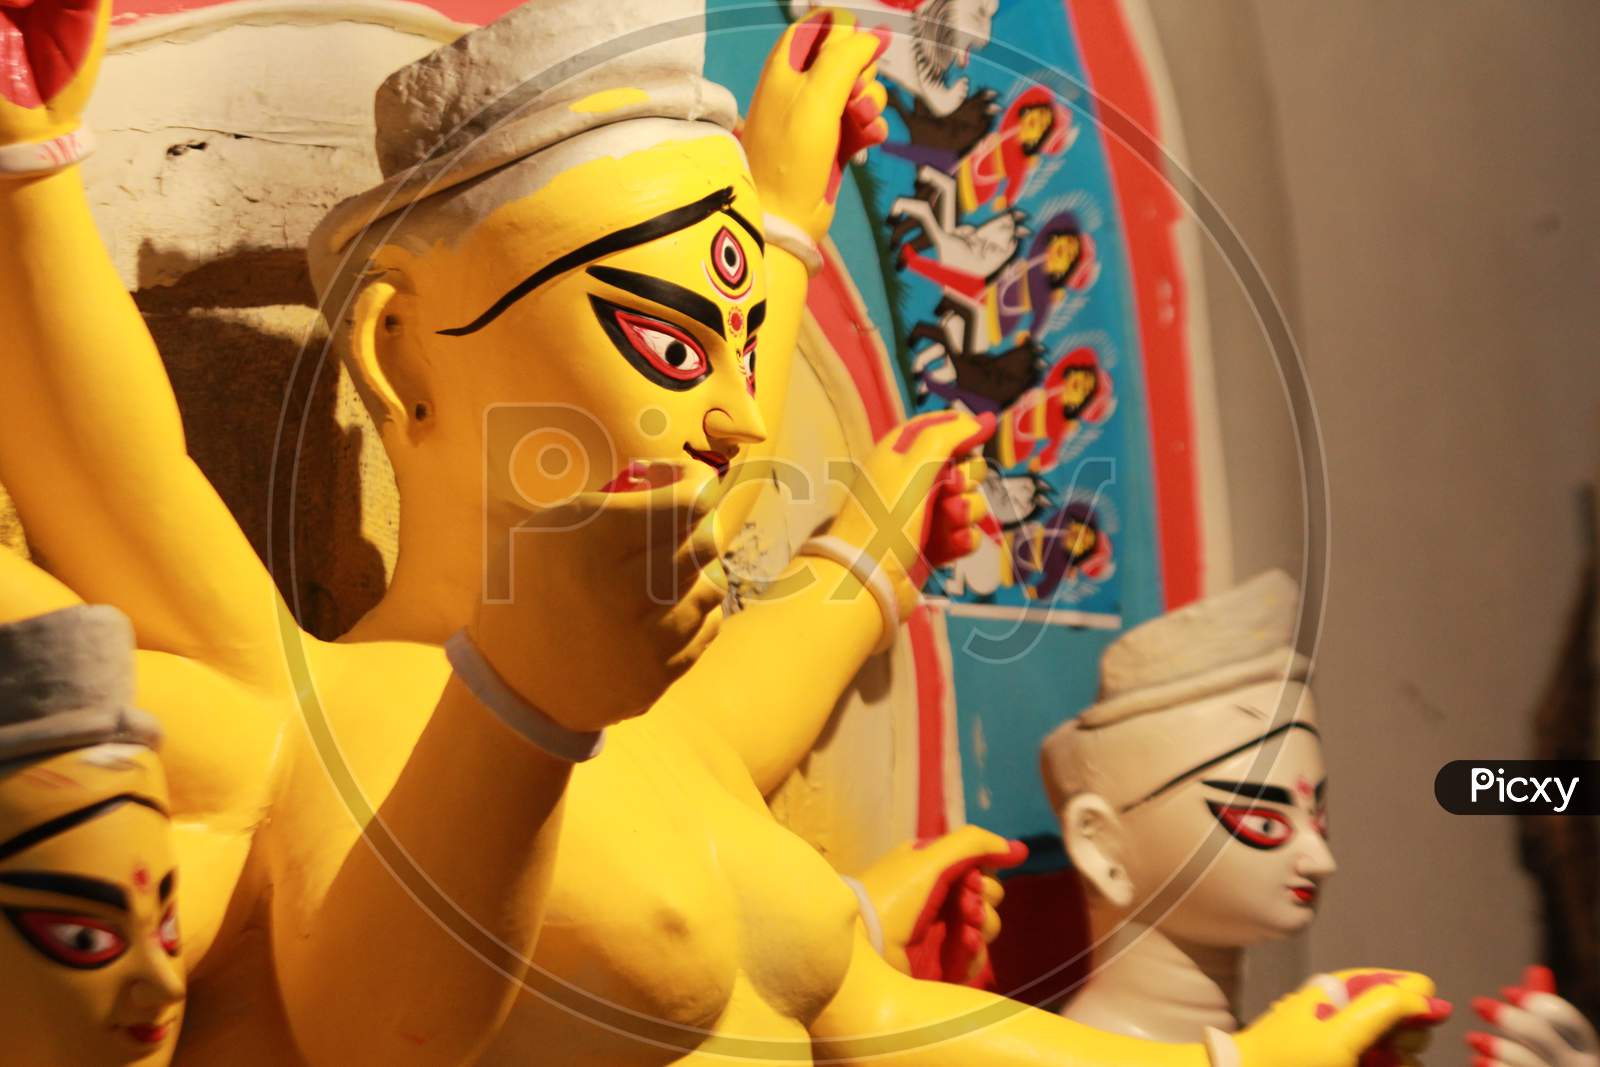 Goddess Durga